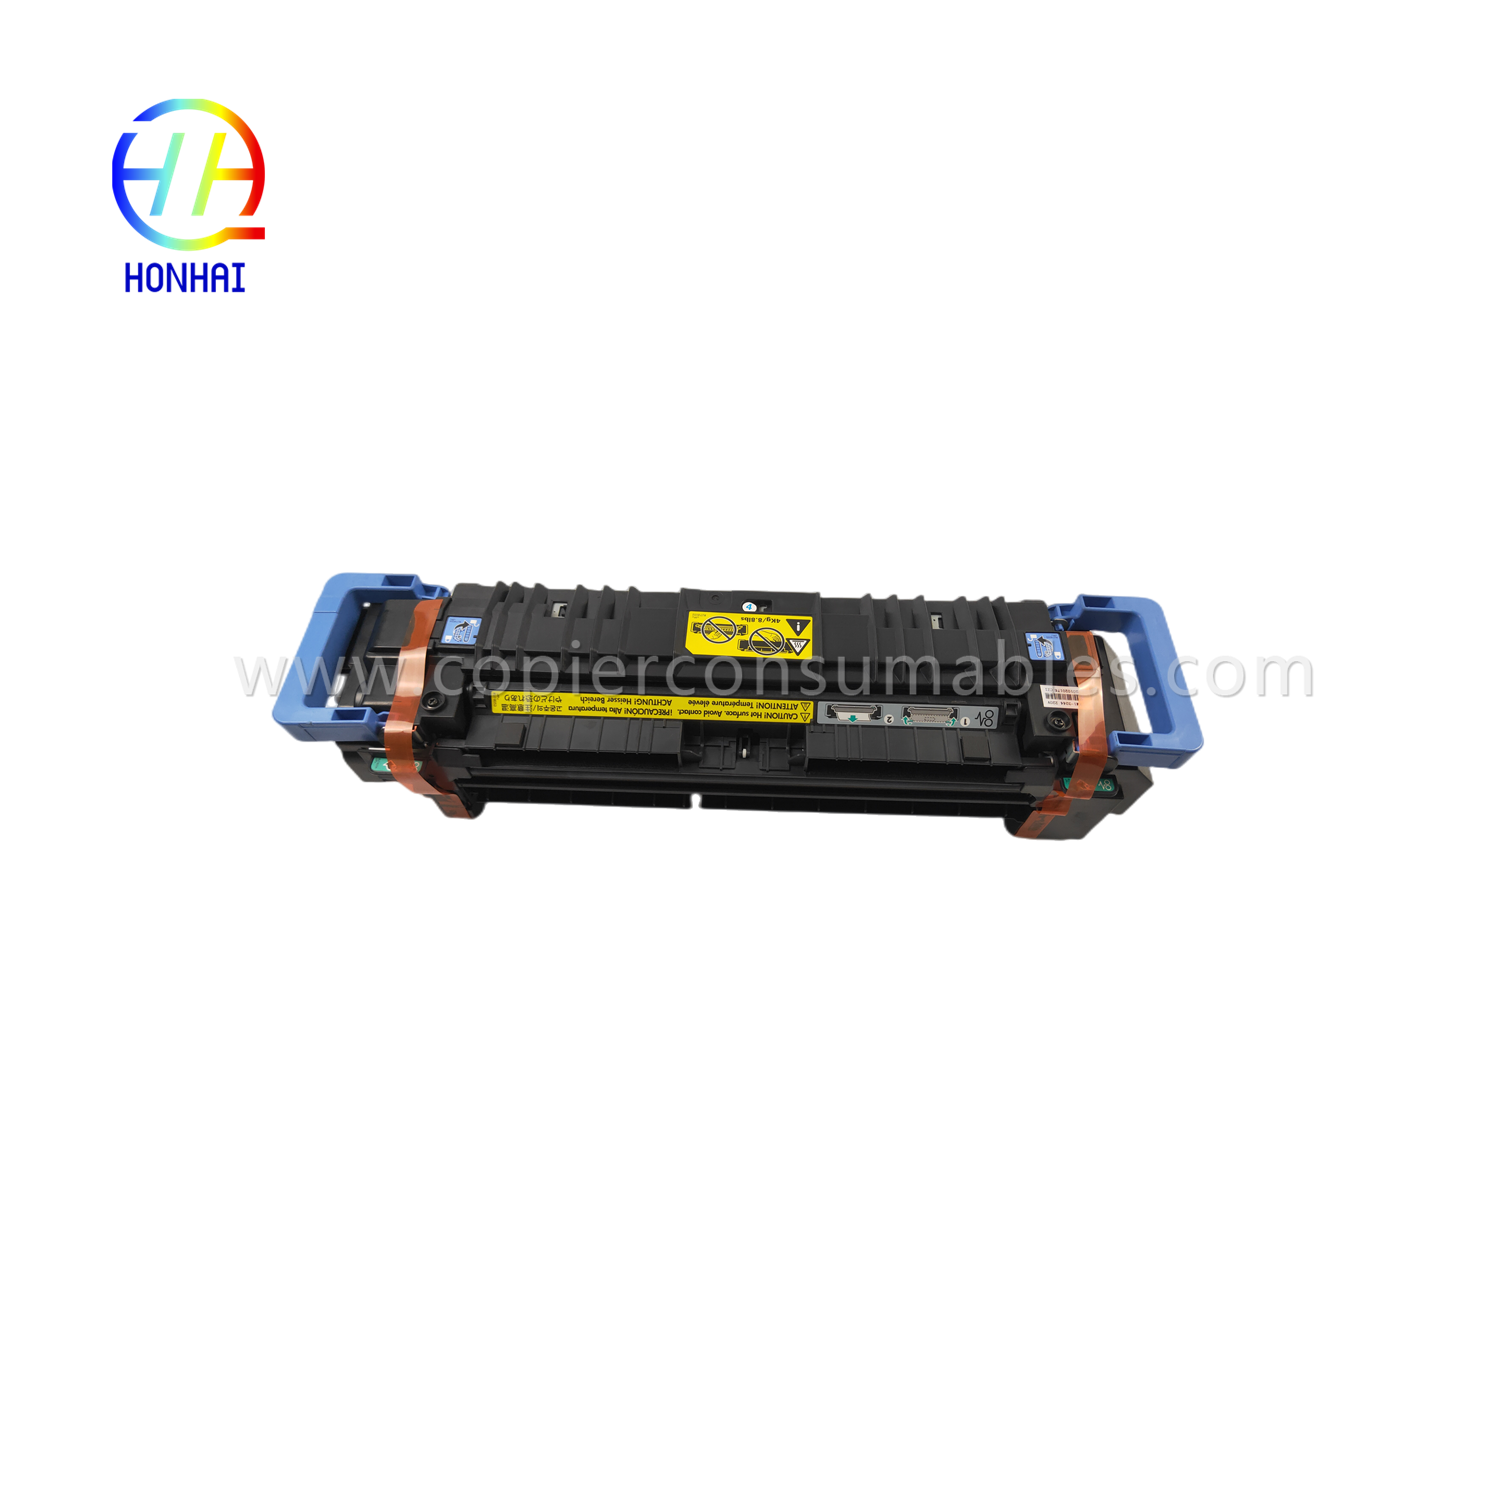 https://c585.goodao.net/fuser-assembly-unit-for-hp-m855-m880-m855dn-m855xh-m880z-m880z-c1n54-67901-c1n58-67901-fusing-assy-heating-fixing